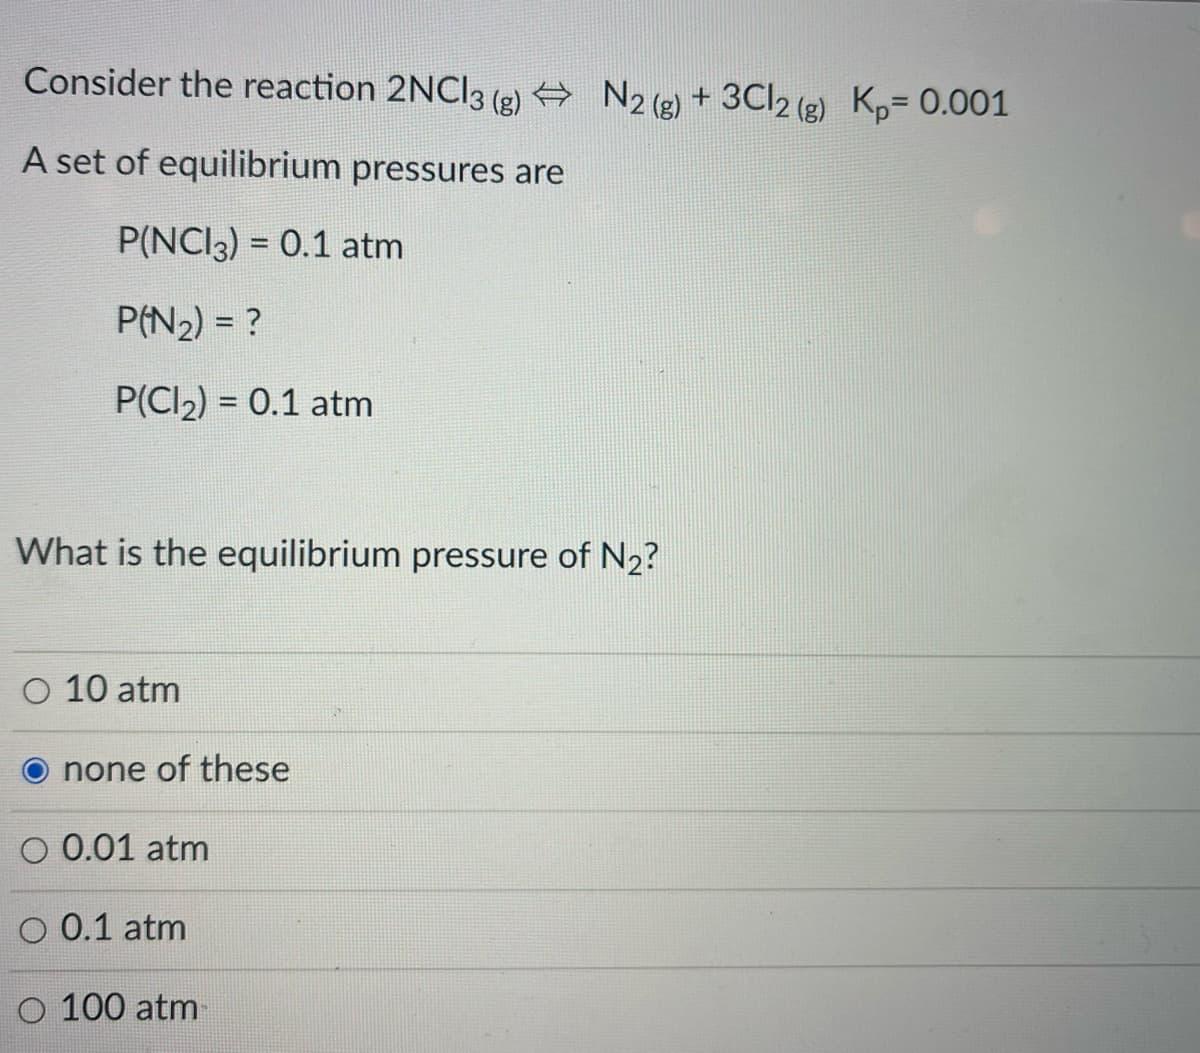 Consider the reaction 2NCI3 (e) + N2 (2) + 3CI2 (2) K,= 0.001
A set of equilibrium pressures are
P(NCI3) = 0.1 atm
P(N2) = ?
P(CI2) = 0.1 atm
What is the equilibrium pressure of N2?
O 10 atm
none of these
O 0.01 atm
O 0.1 atm
O 100 atm
